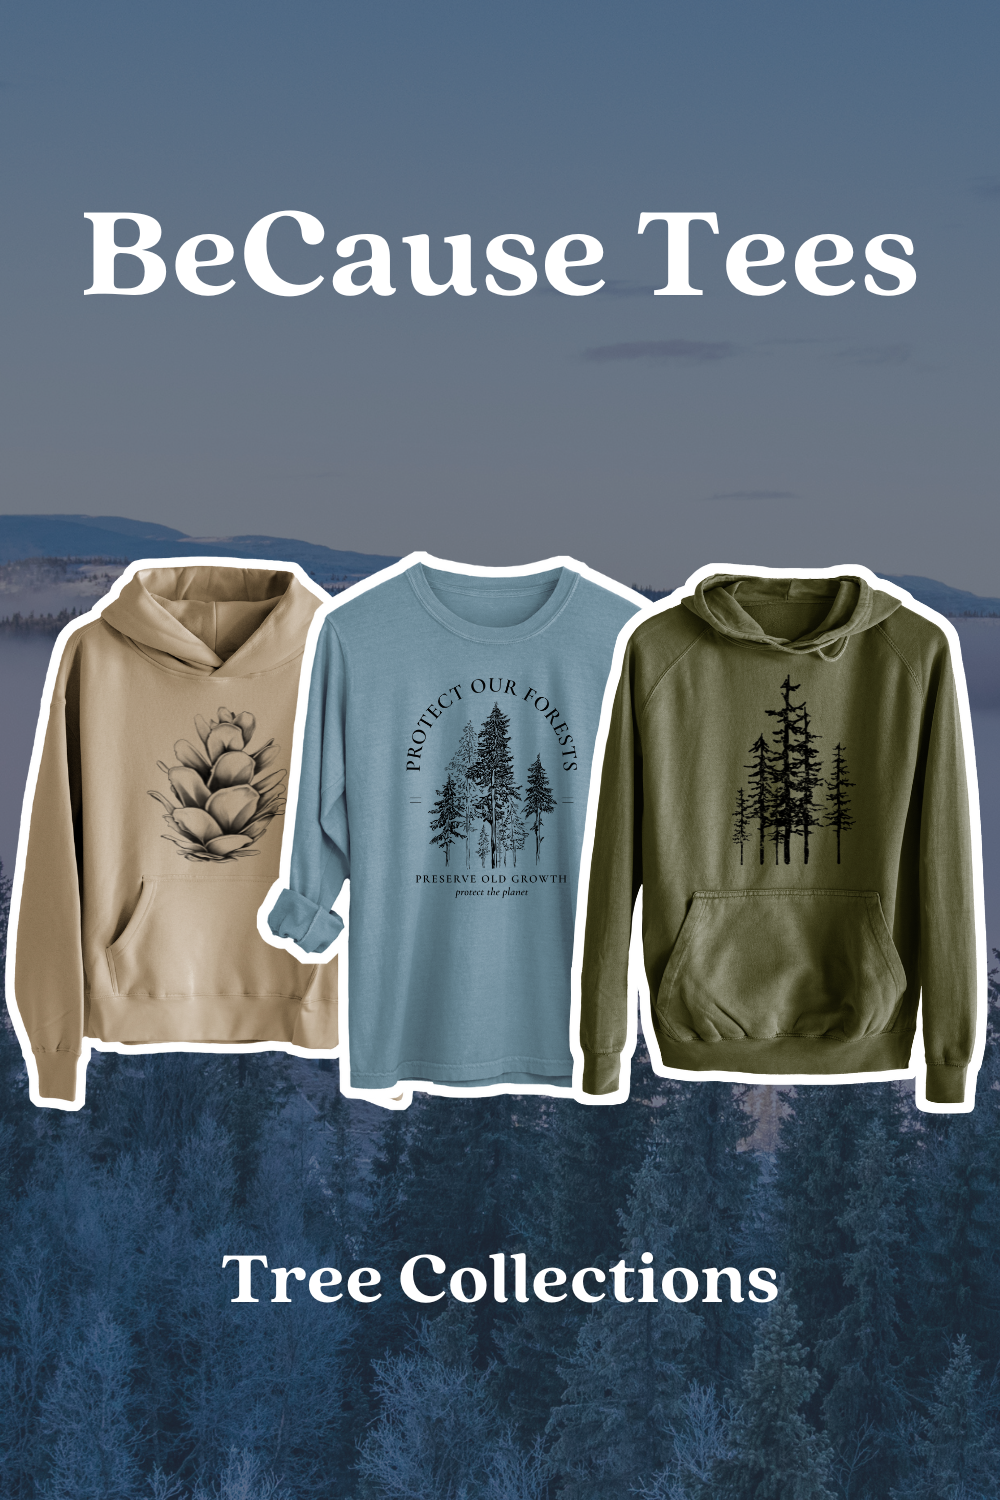 Trees shirts and hoodies